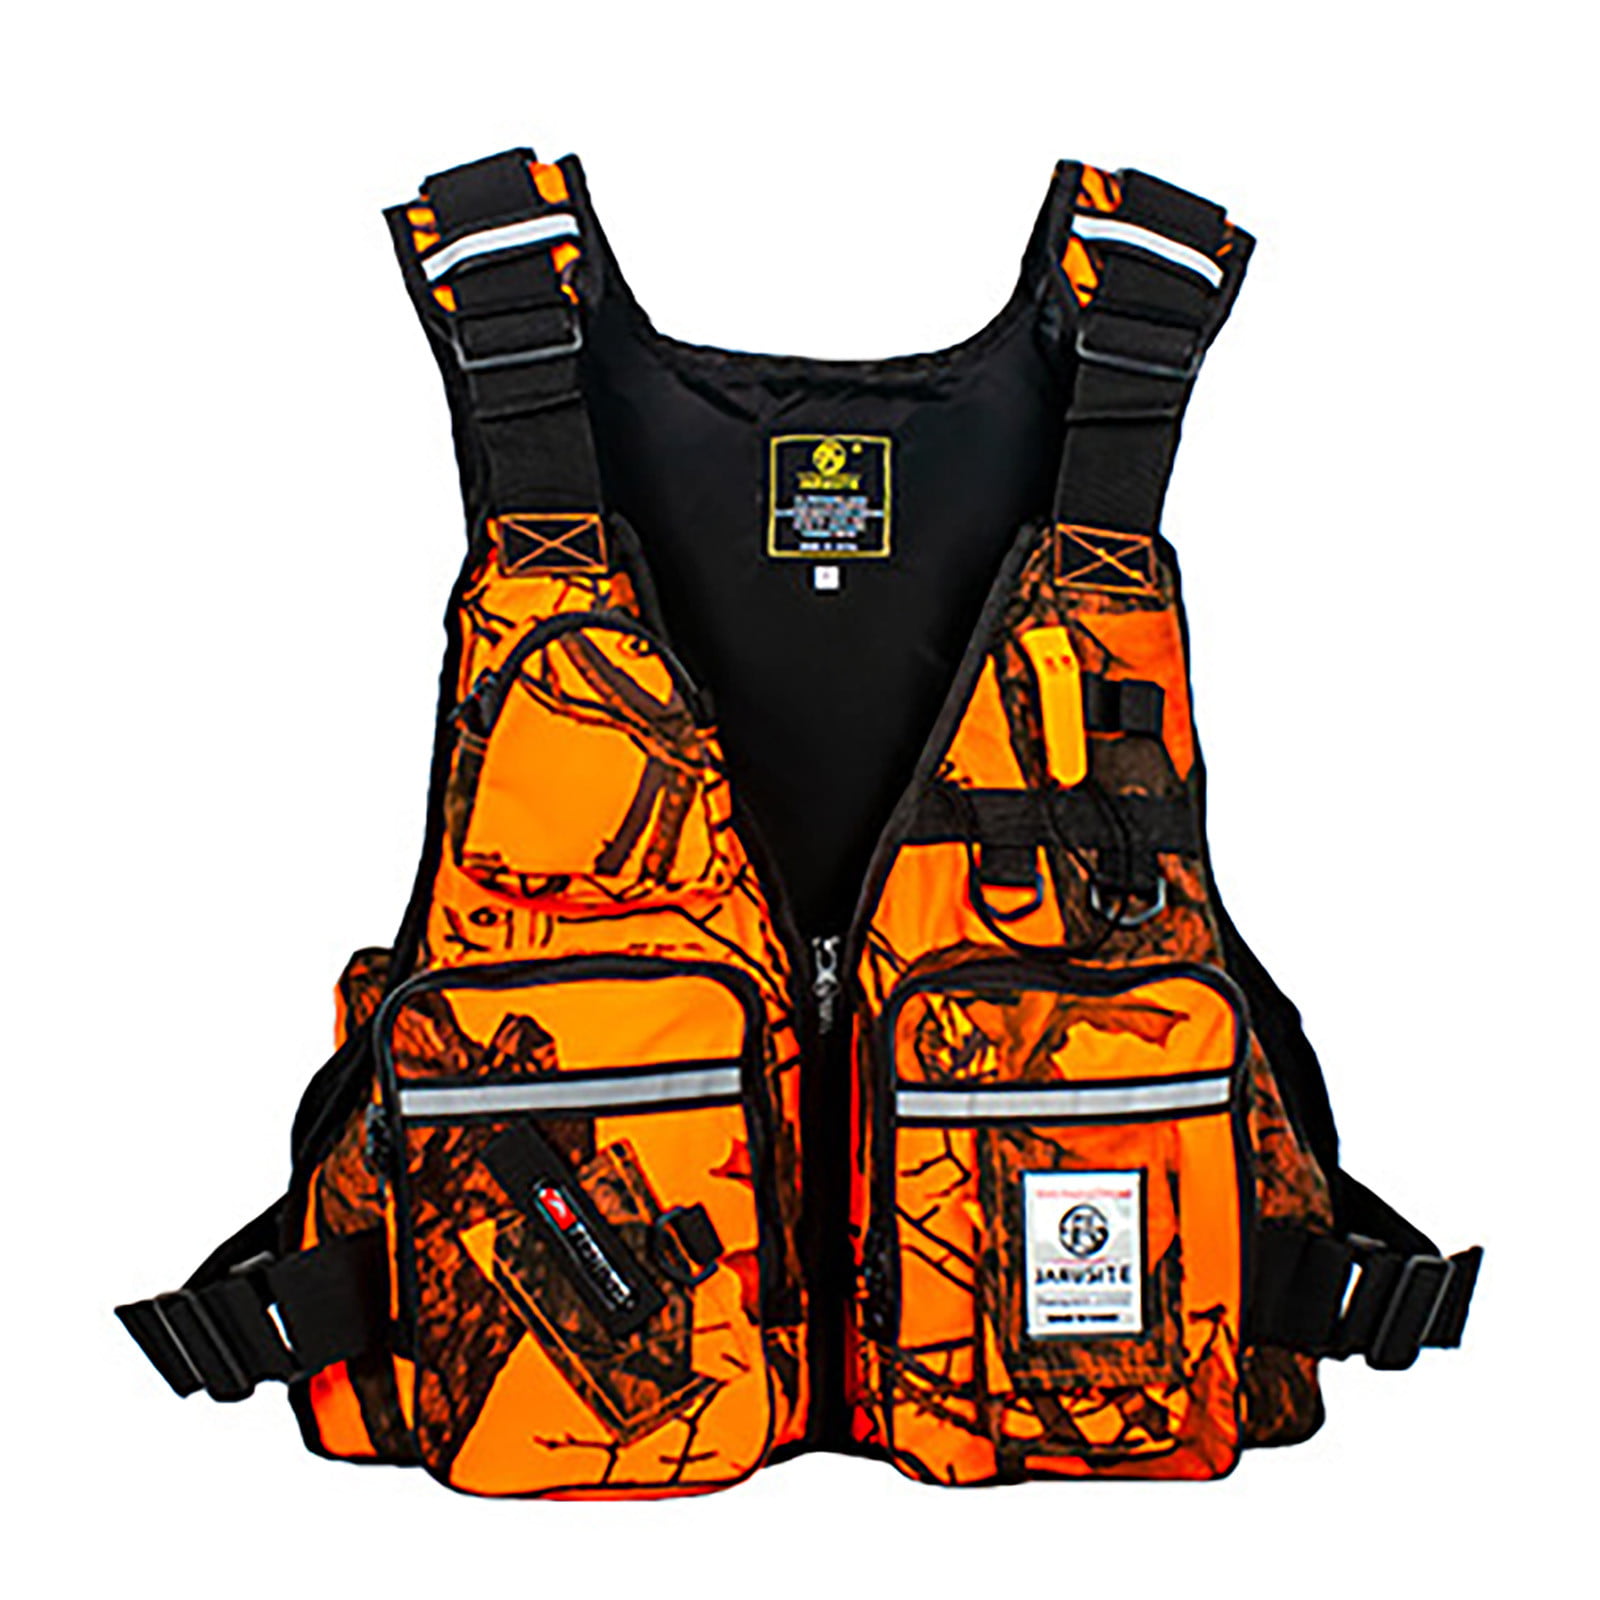 Multi-Pockets Life Jacket with Foam Pad Sleeveless Jacket Life-Saving Vest 